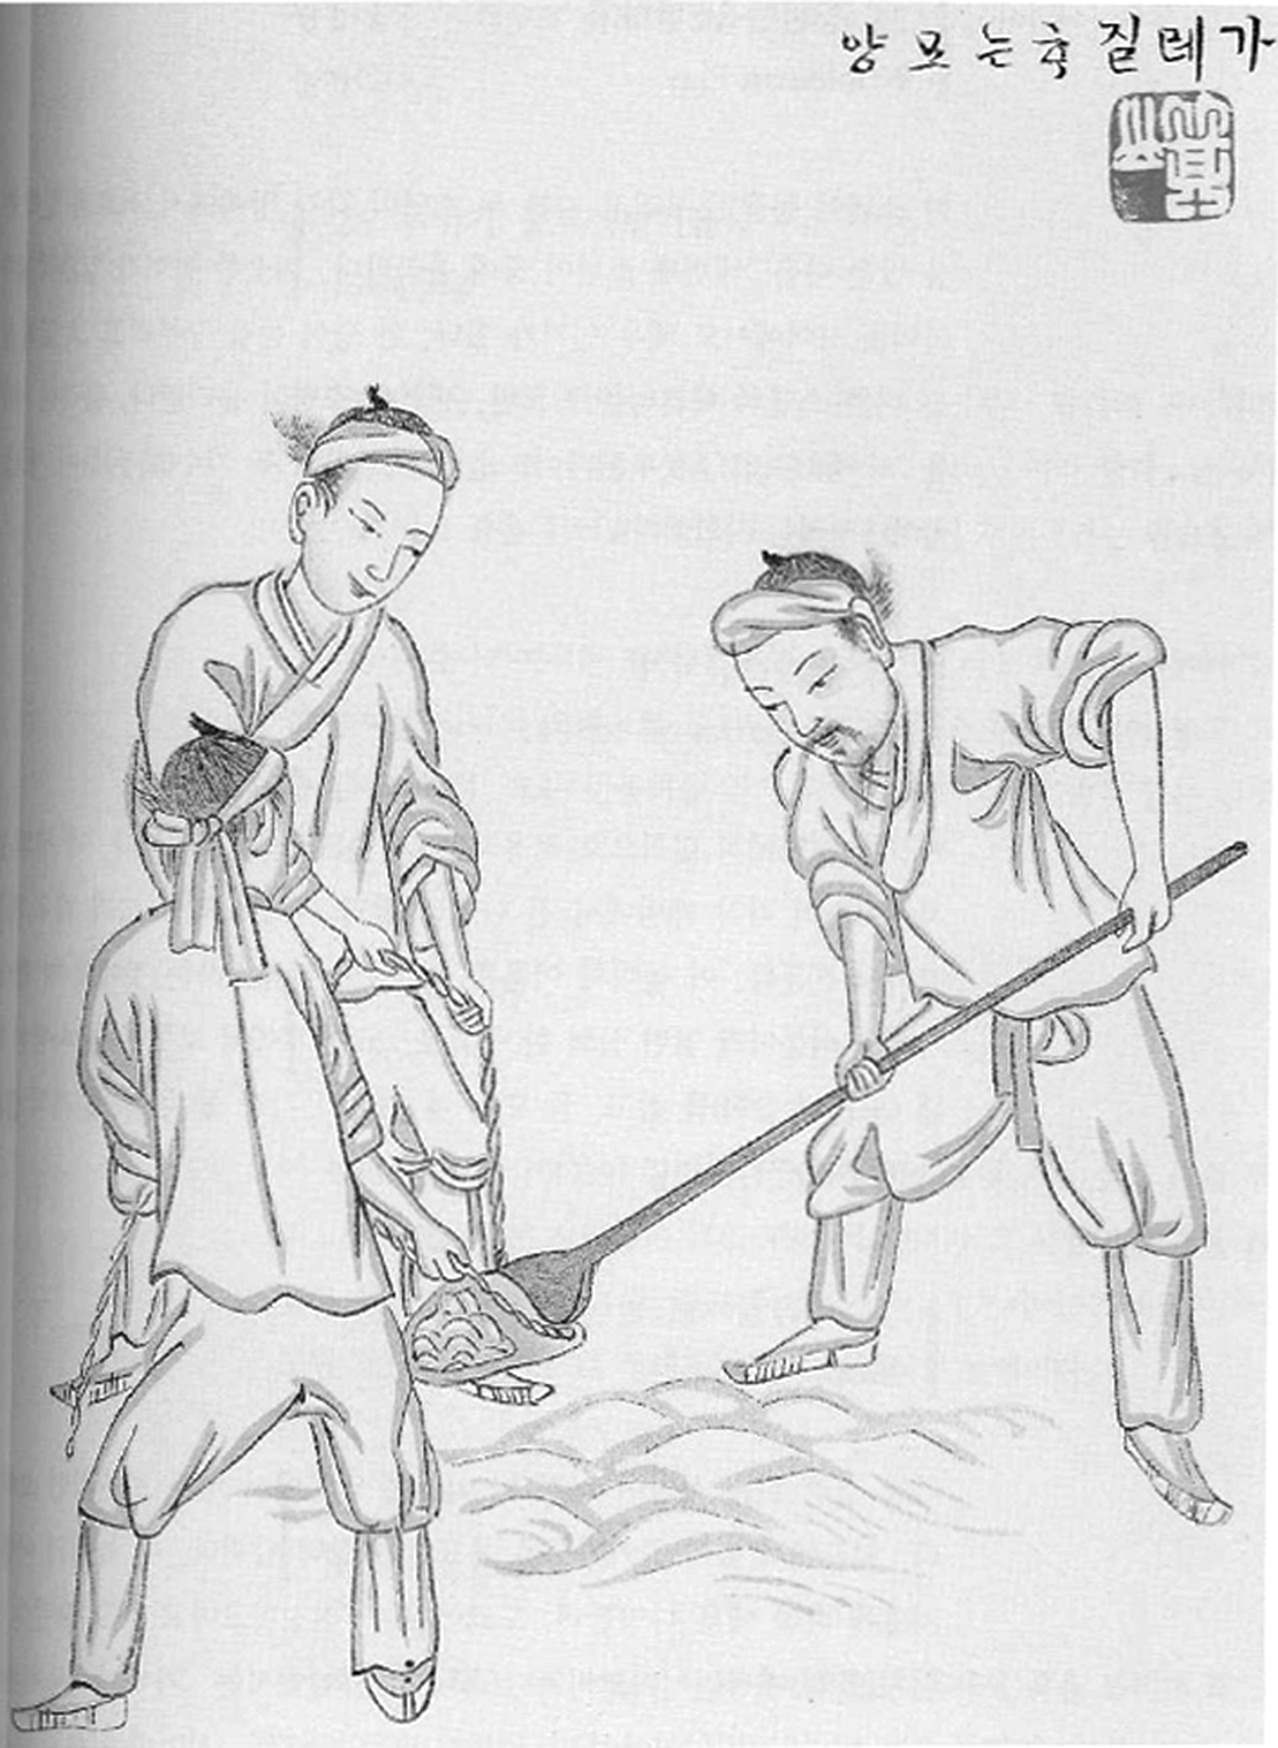 Shoving with karae (Korean Games p. 83, Fig. 77).